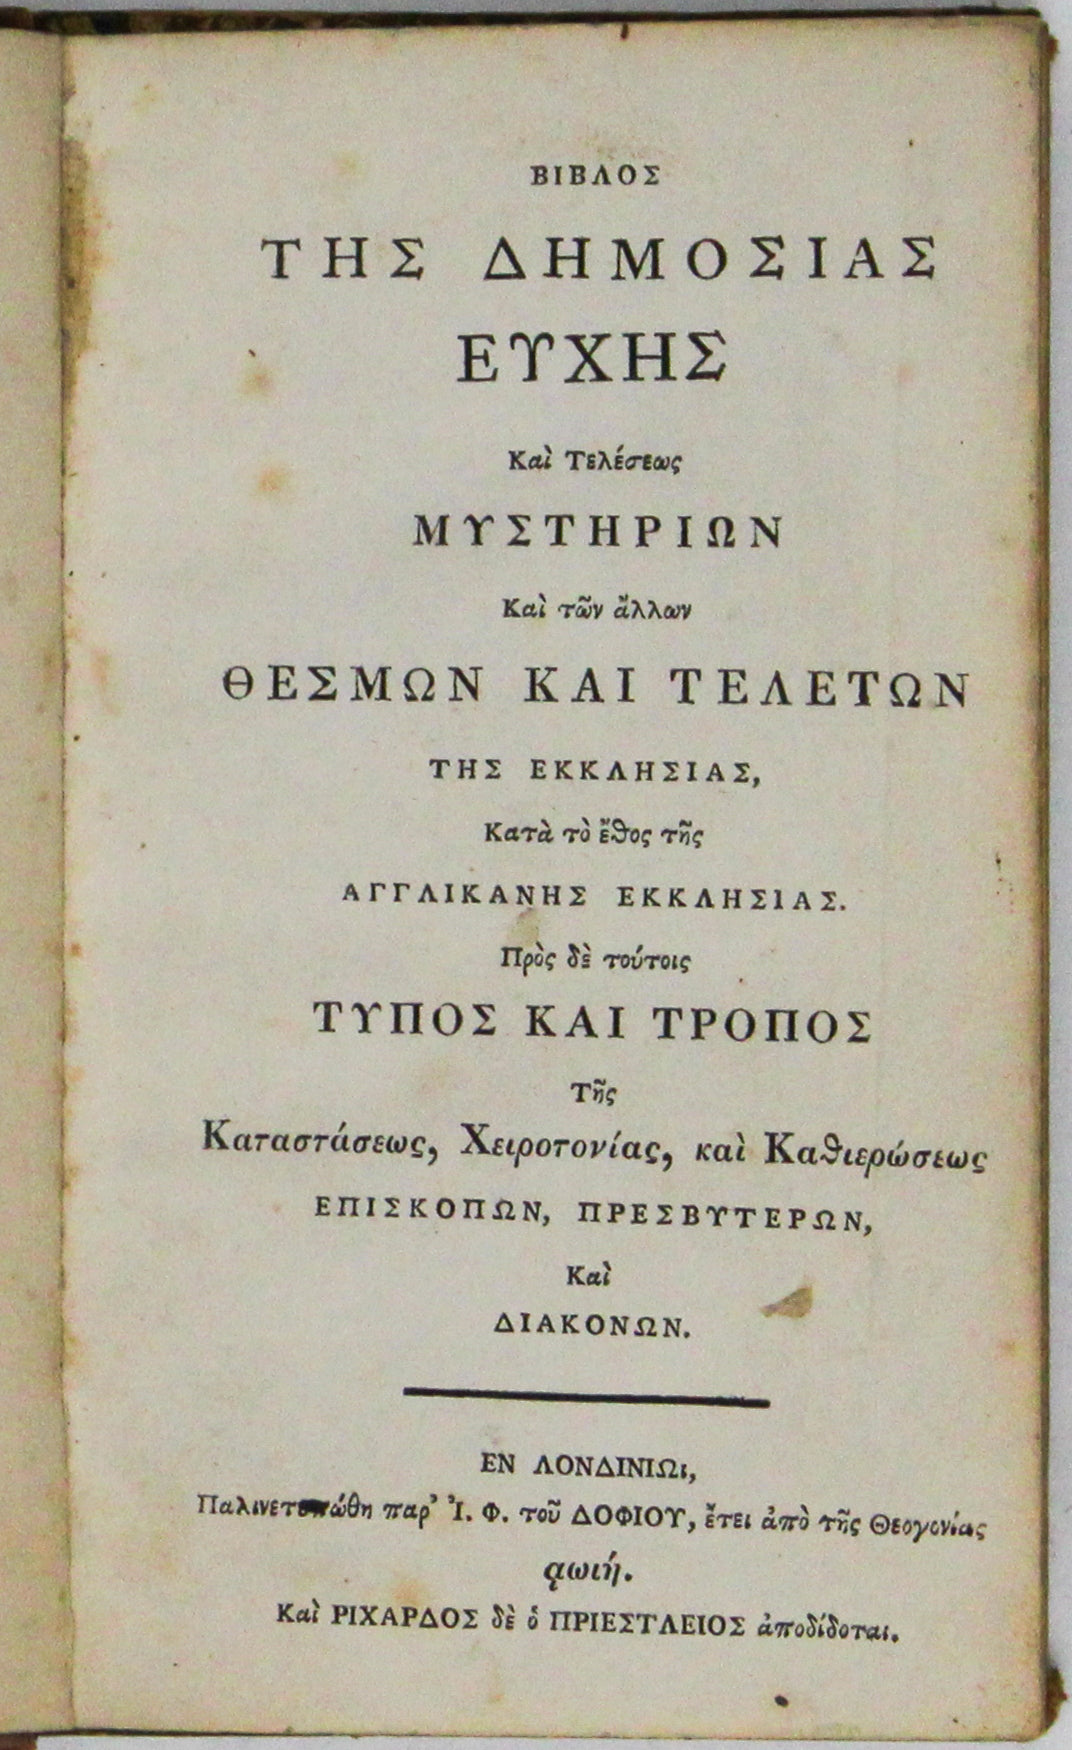 Book of Common Prayer in Greek